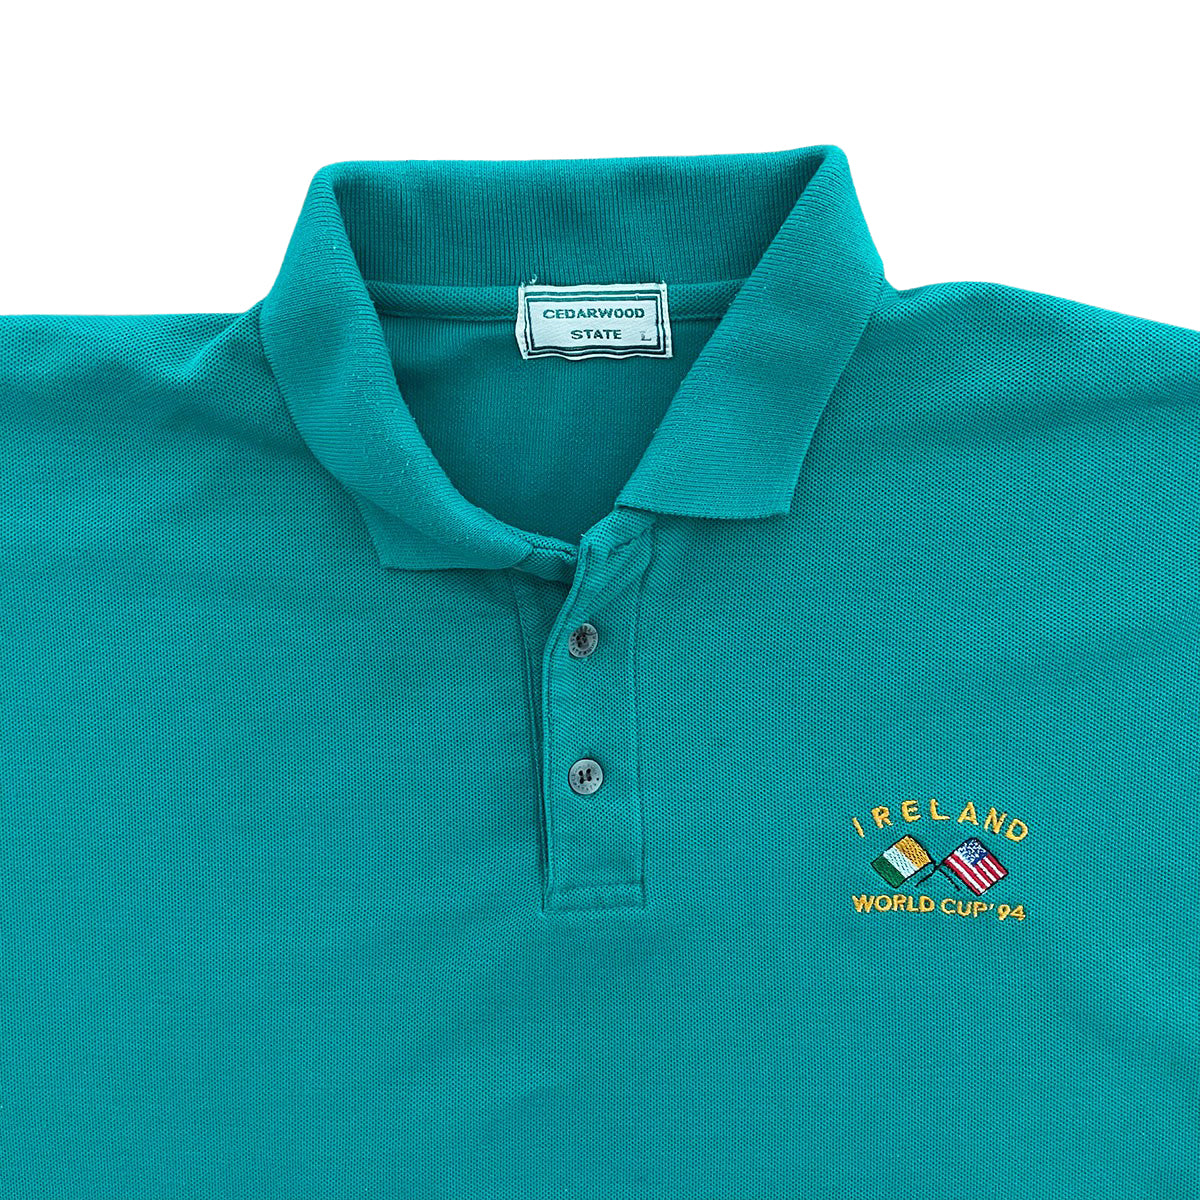 Ireland World Cup '94 Polo Shirt - L